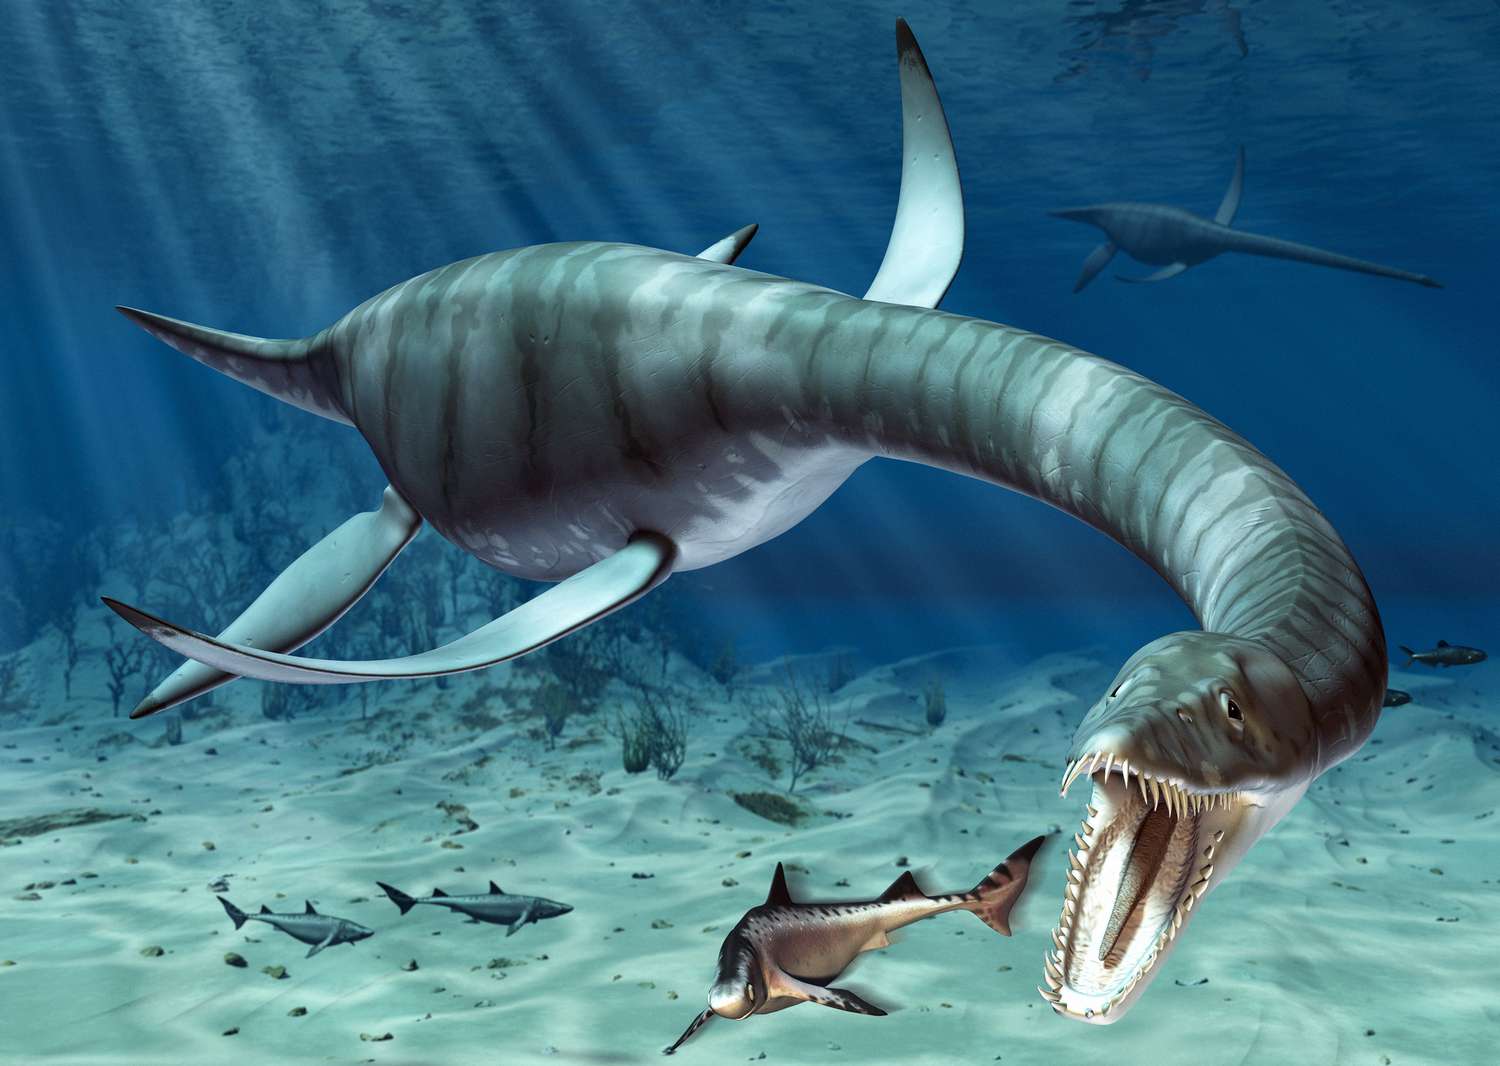 Whiplash In Evolution: Plesiosaurs Doubled Their Neck Length by Adding New Vertebrae?
